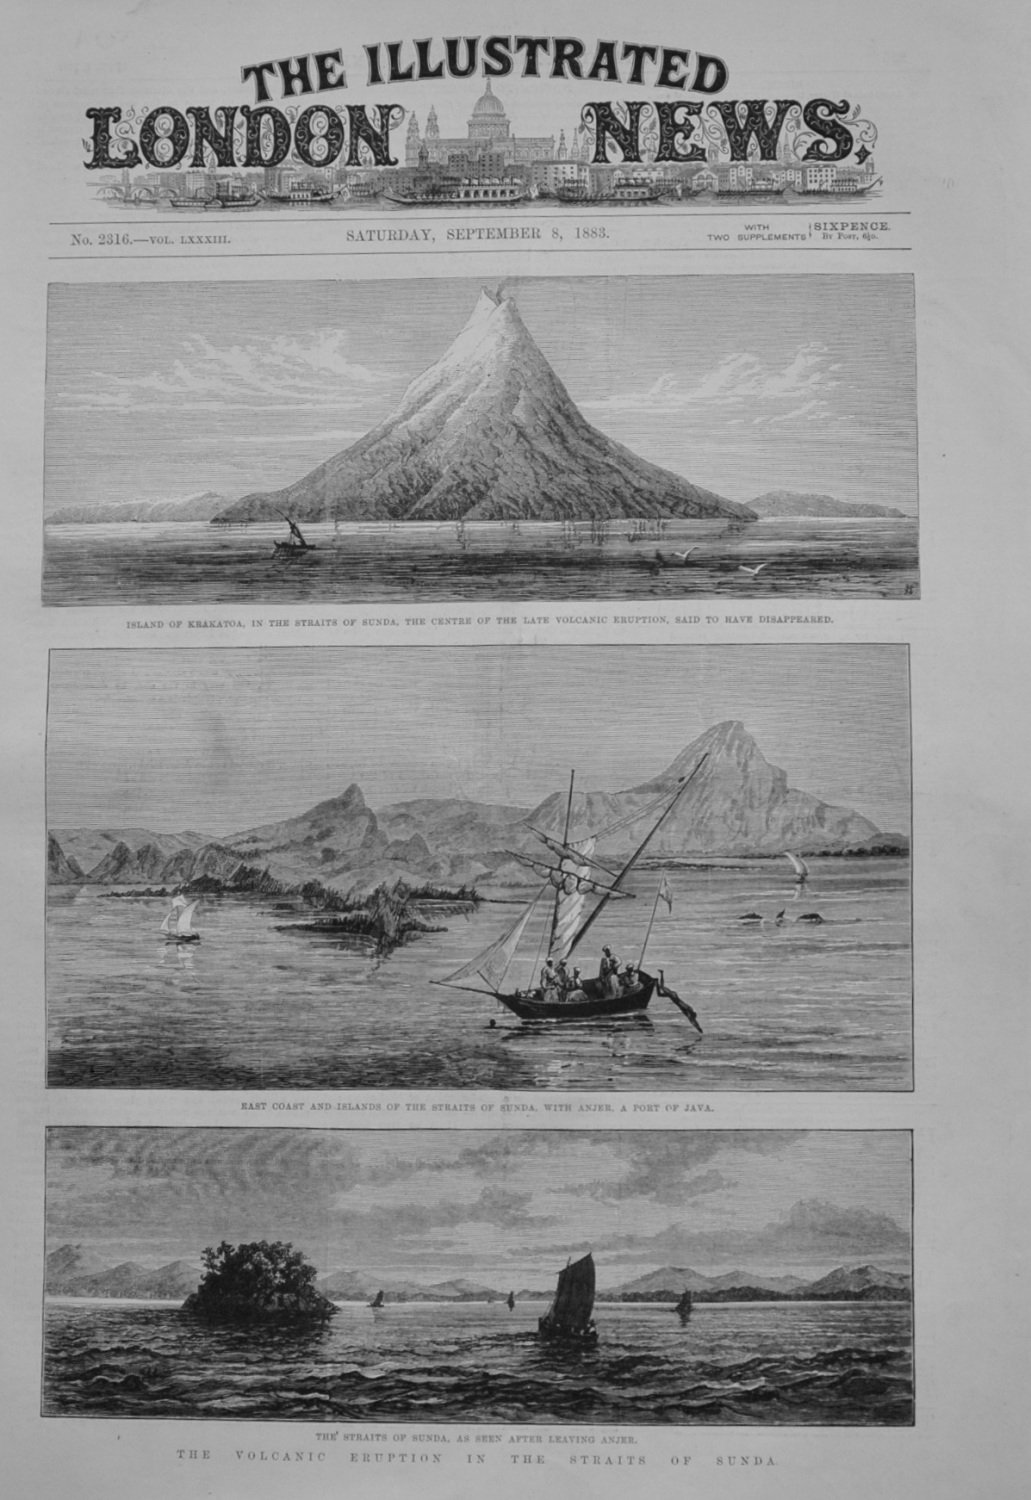 The Volcanic Eruption in the Straits of Sunda - 1883